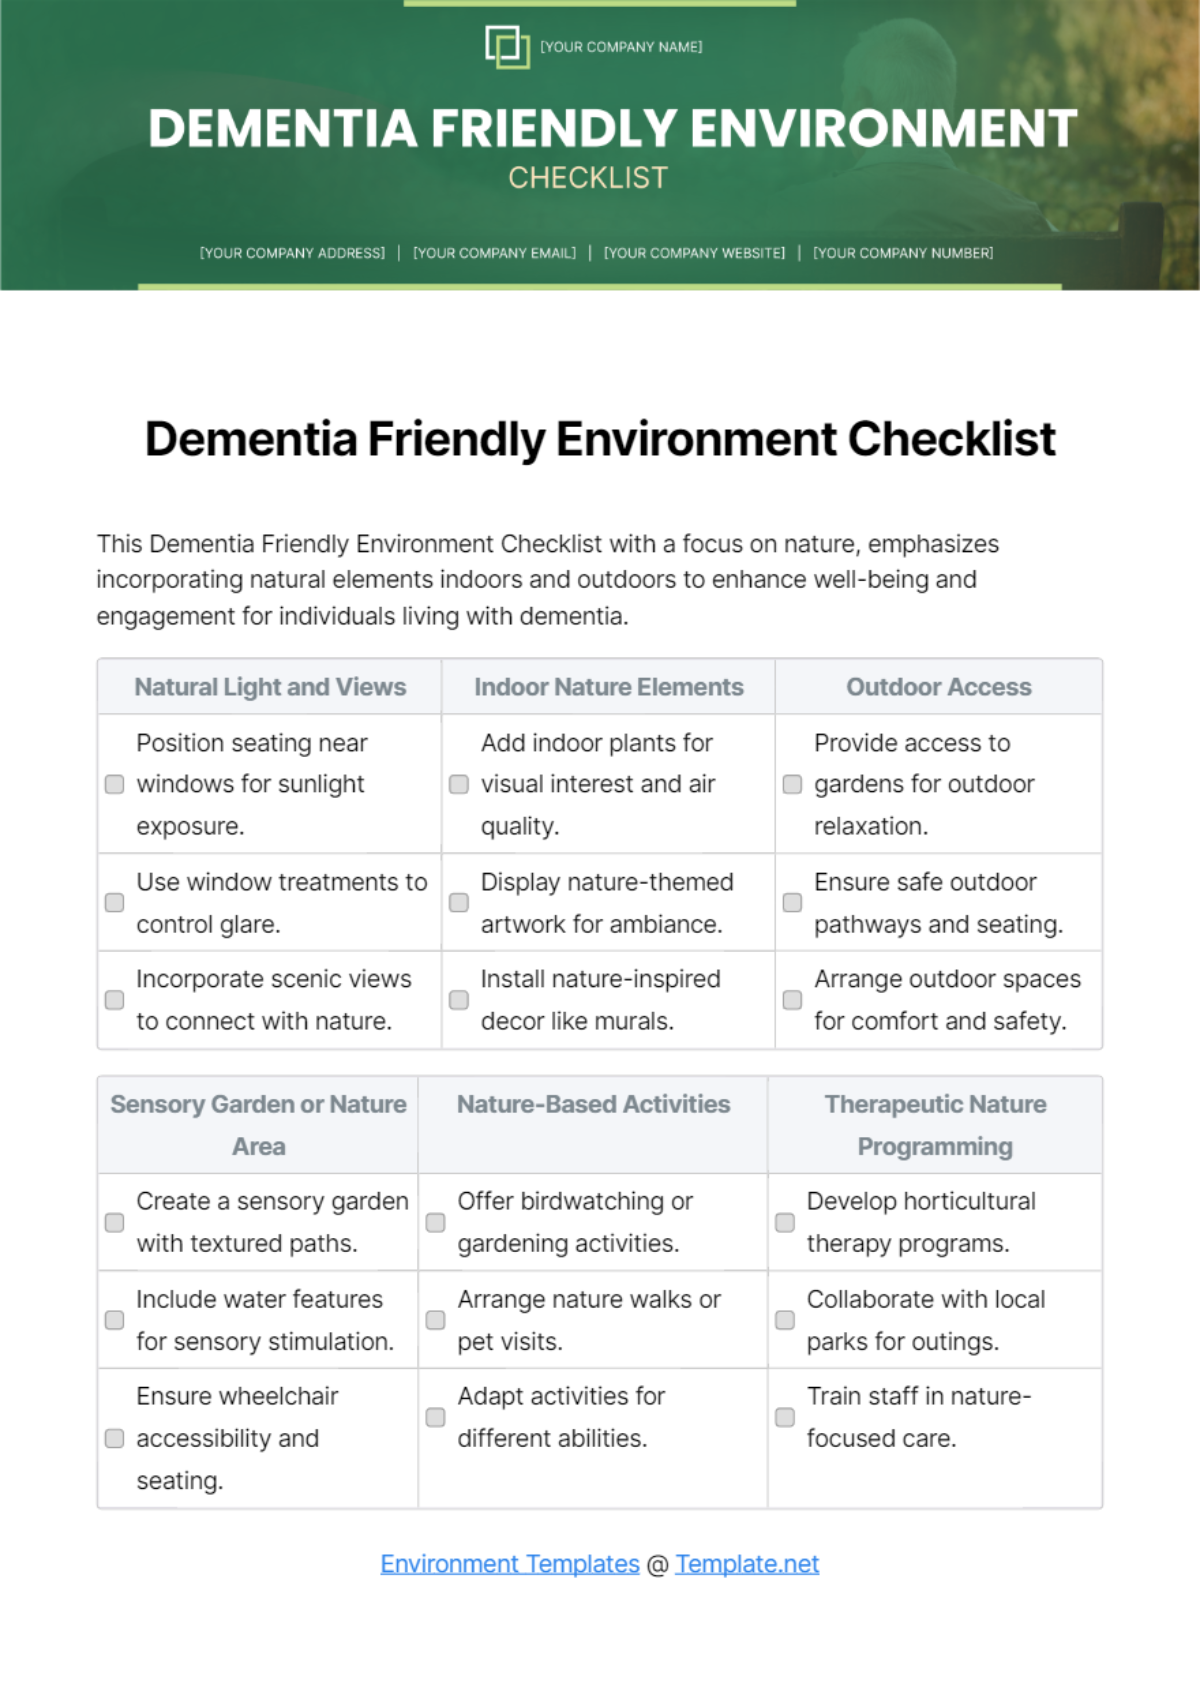 Dementia Friendly Environment Checklist Template